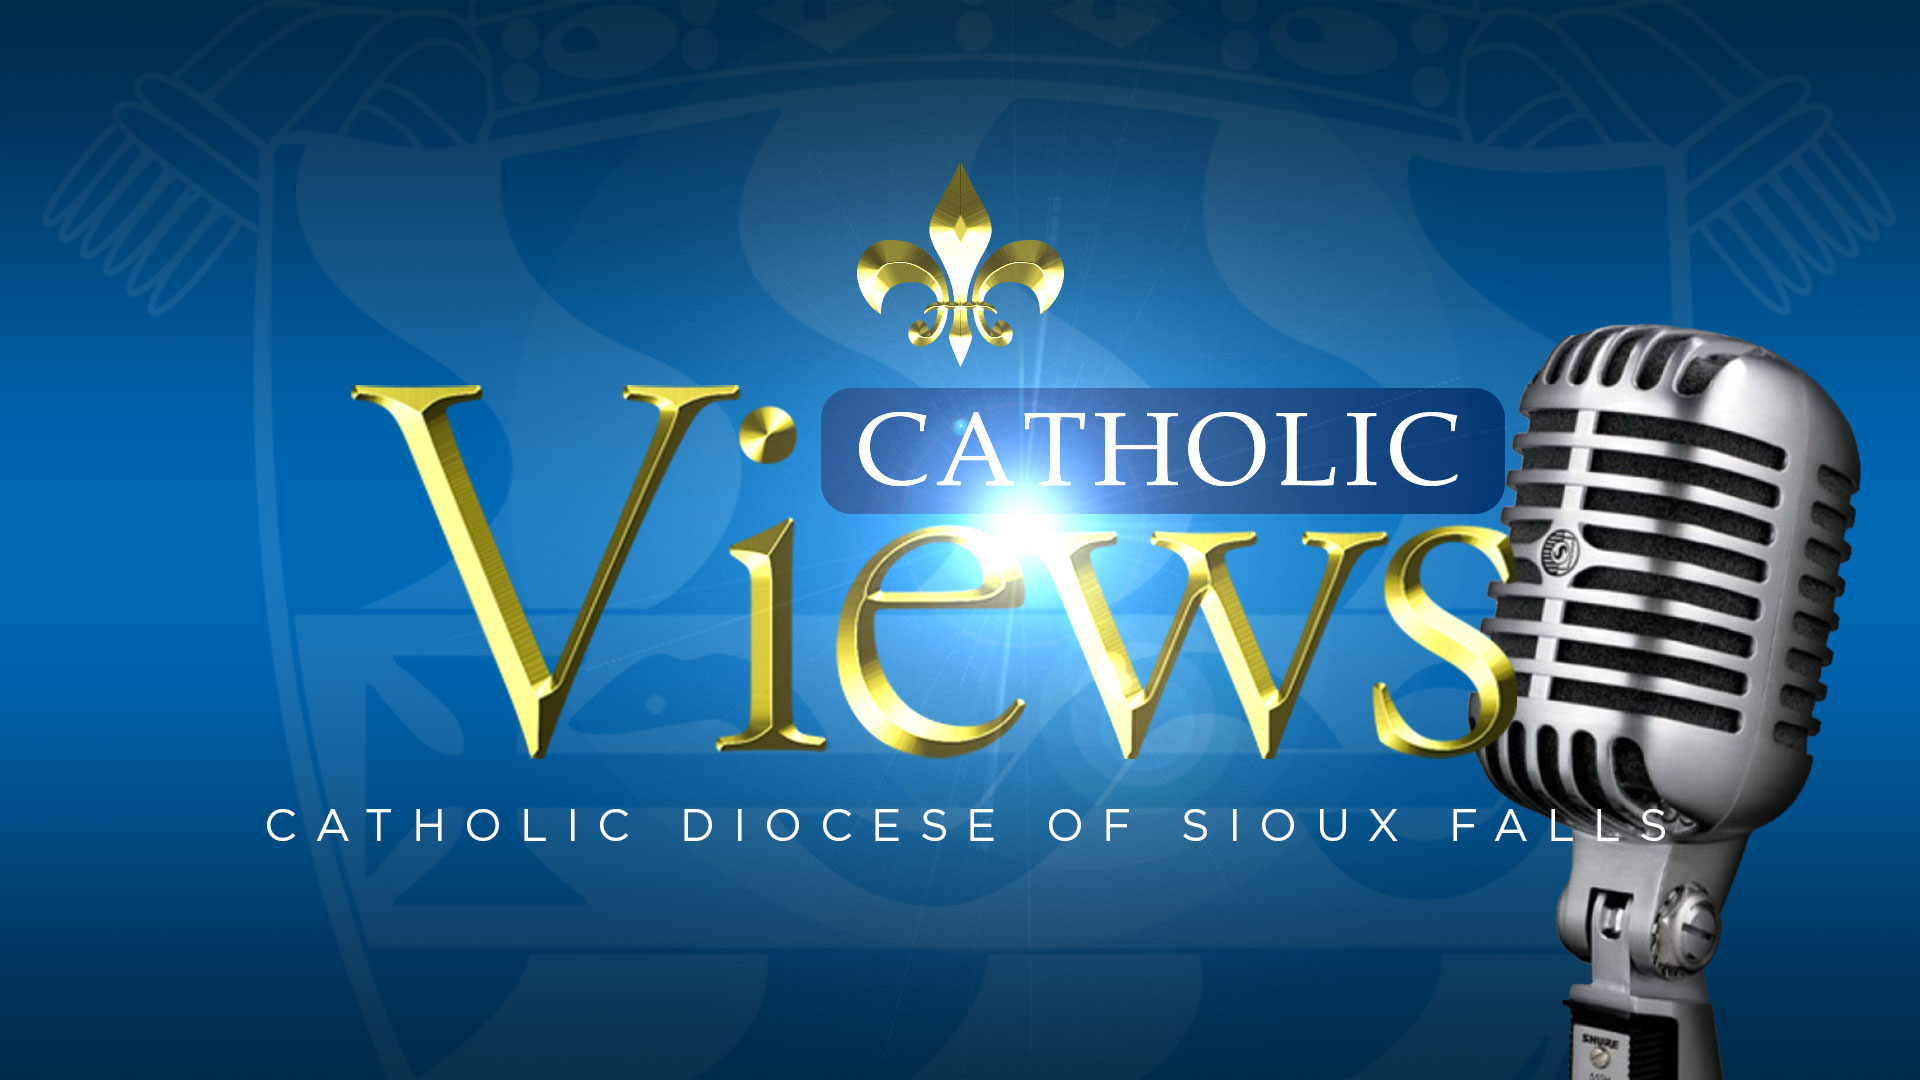 Getting to know St. Charles de Foucauld | Catholic Views – May 15, 2022